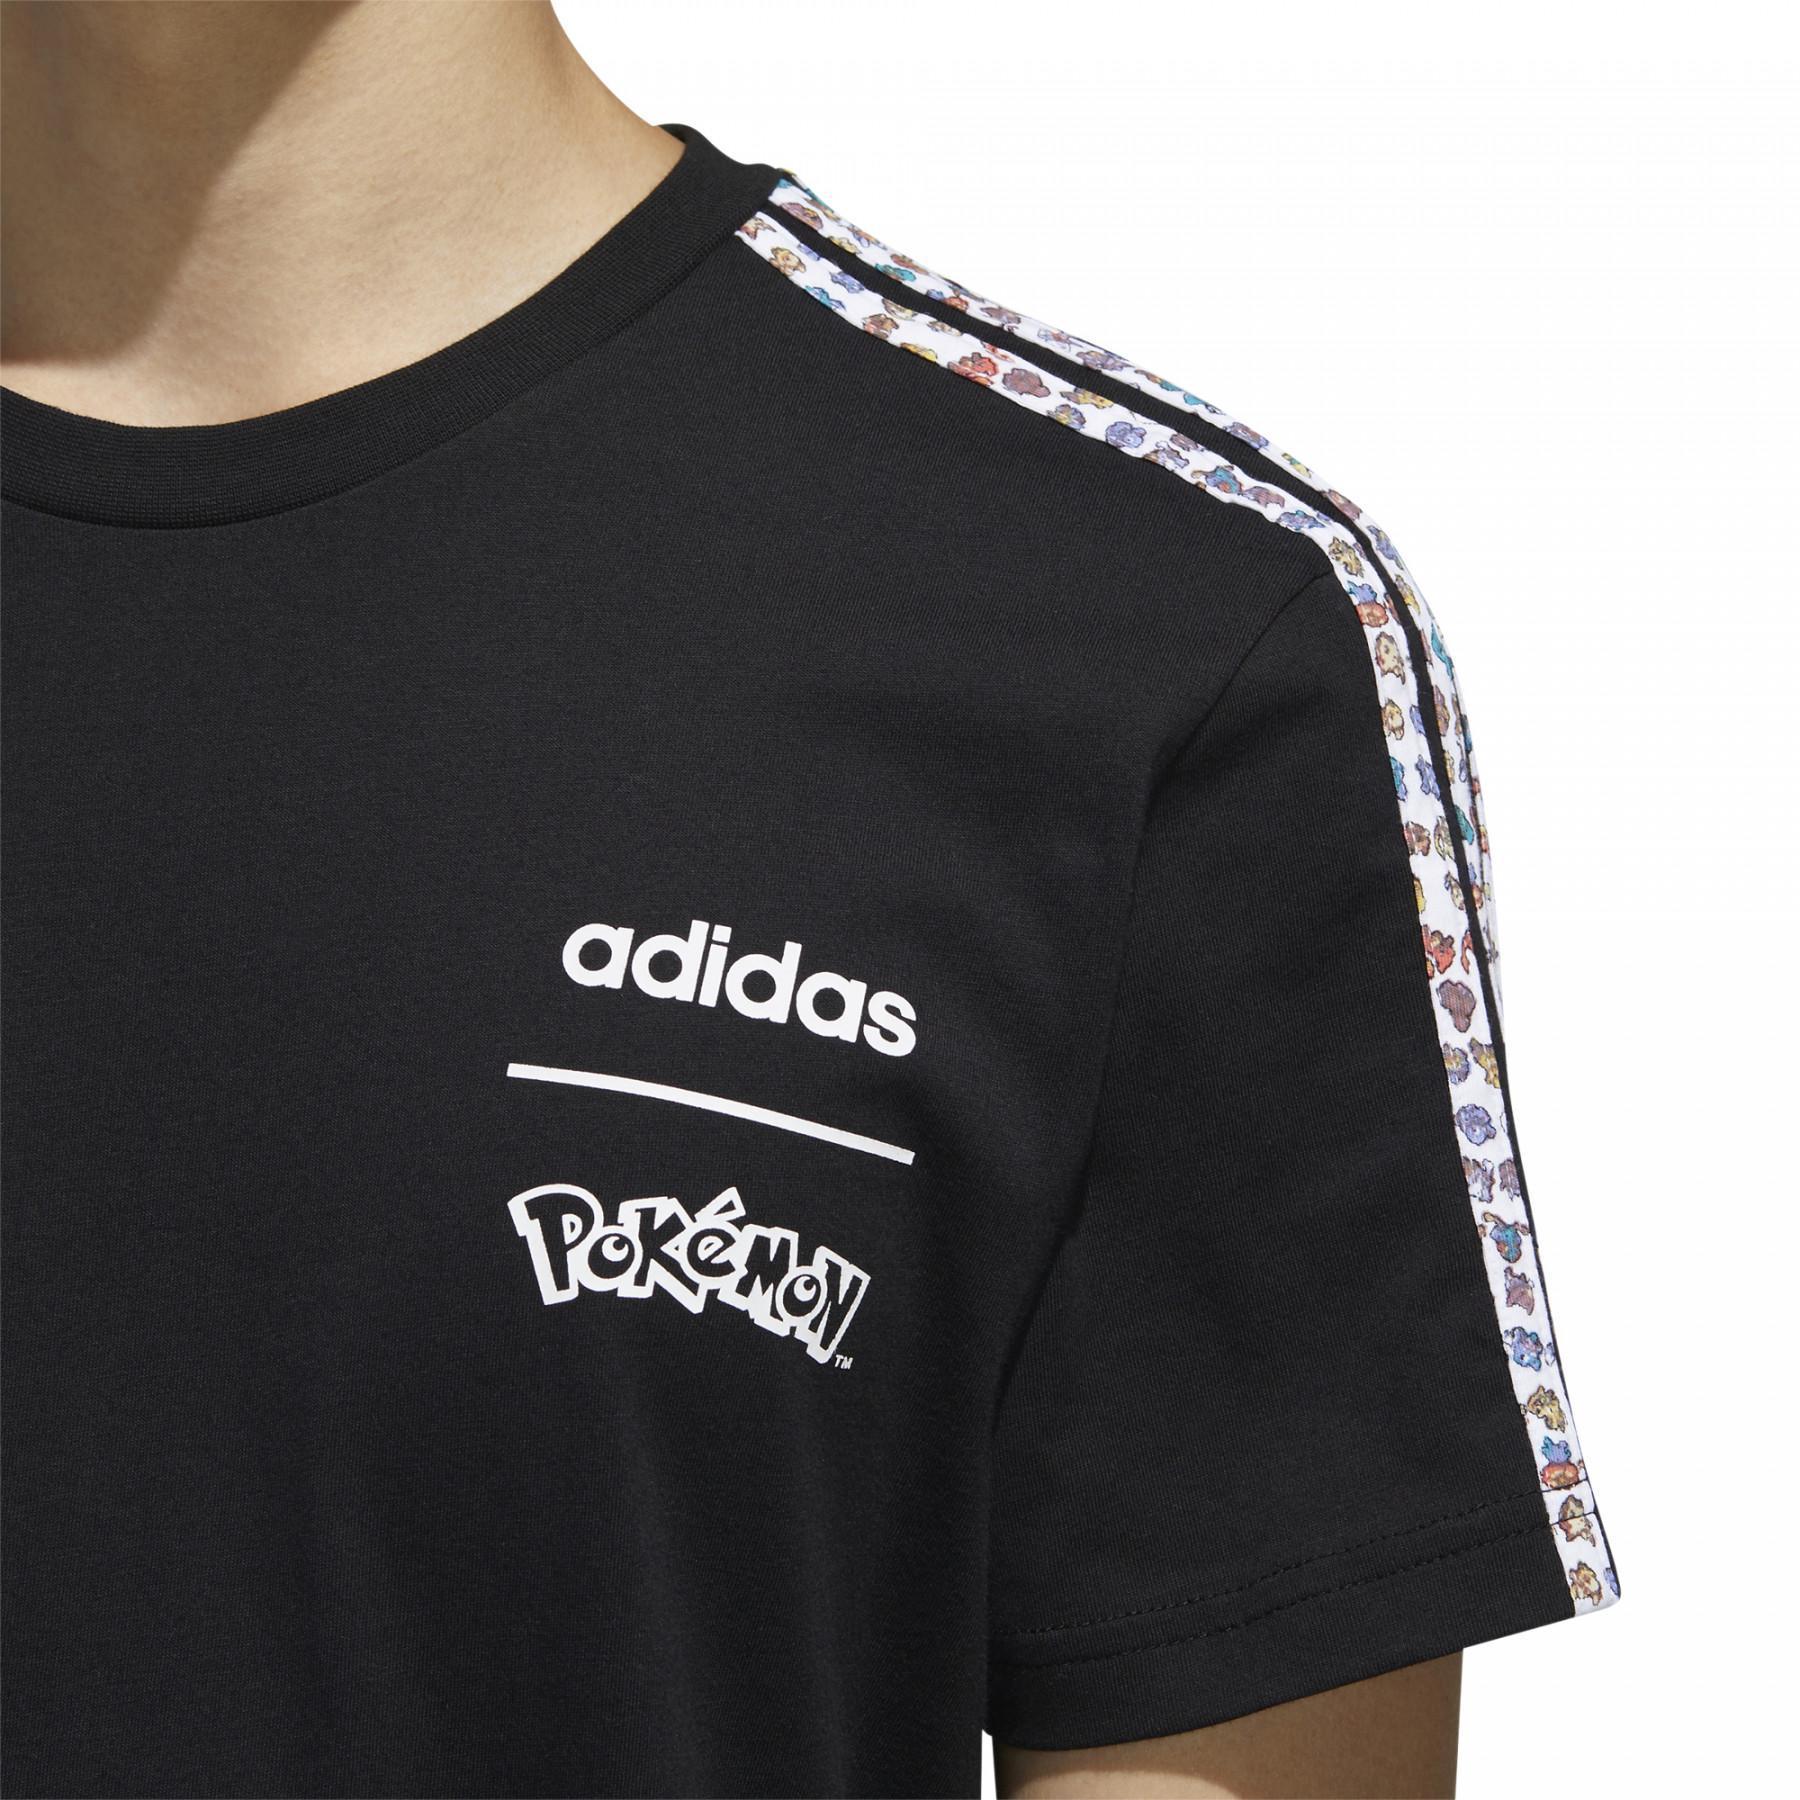 Camiseta adidas Pokémon Trainer